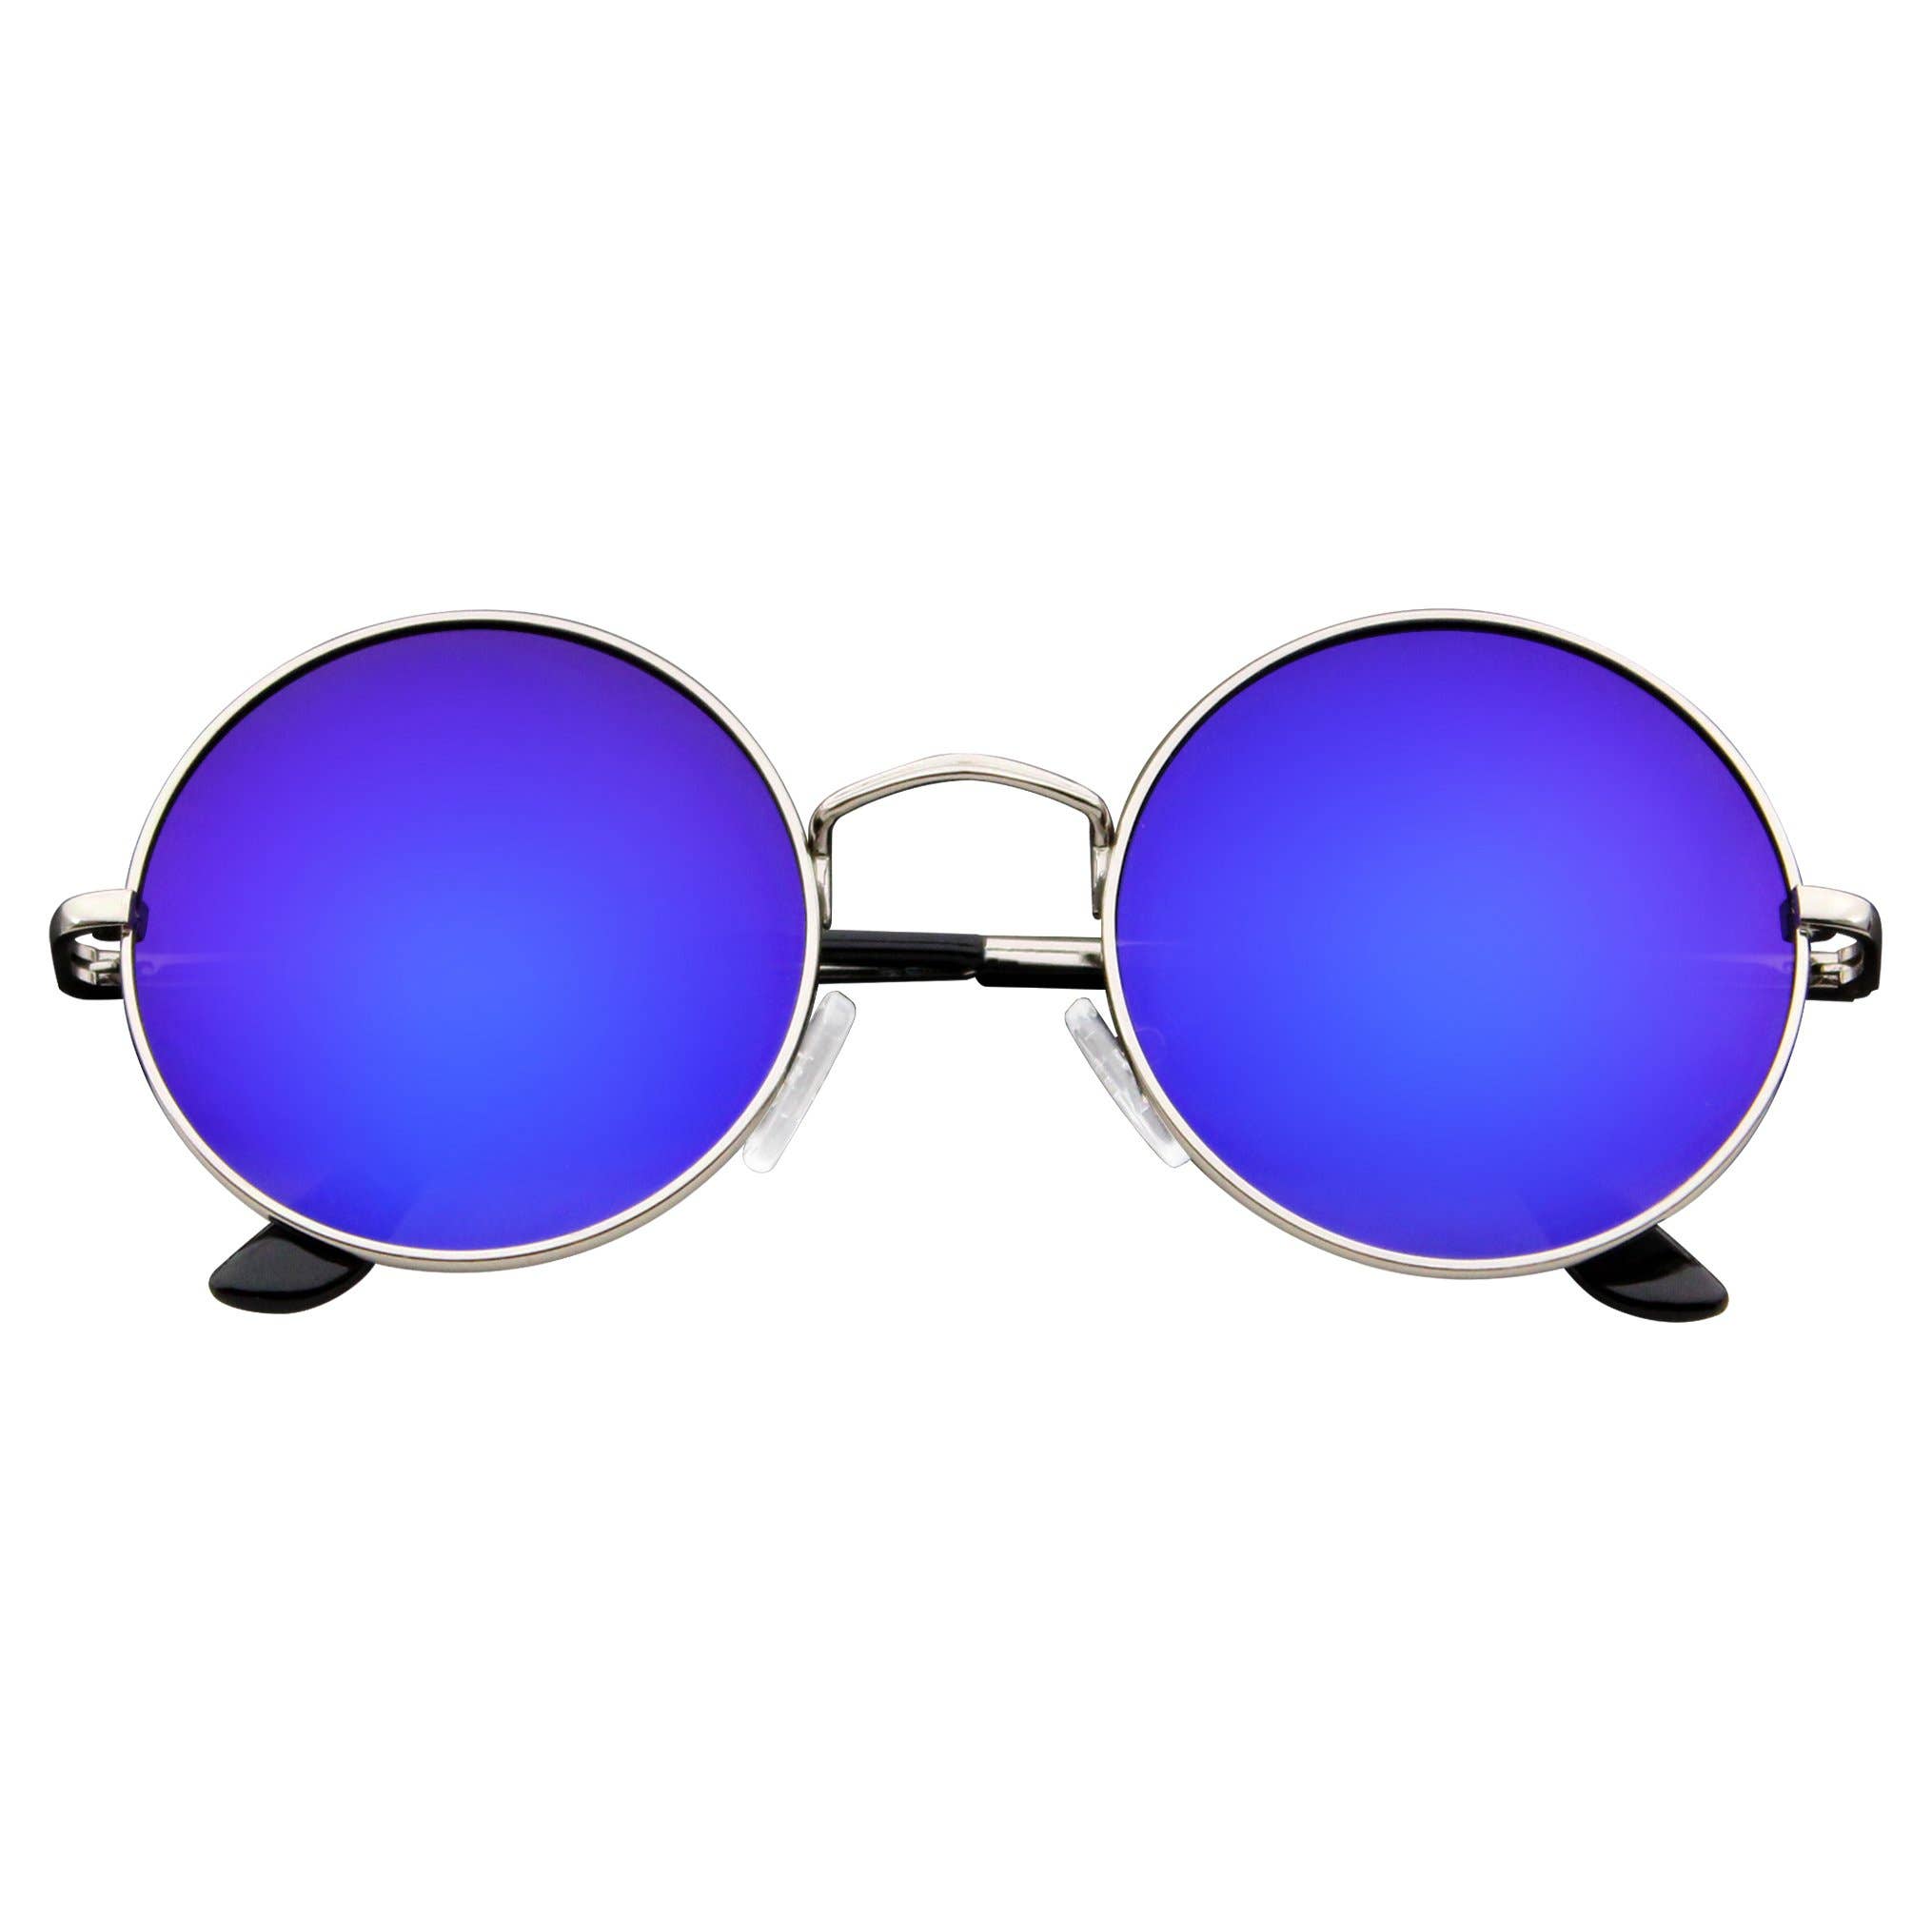 Round Sunglasses for Women Mirrored Vintage Retro Hippy Ibiza Festival Blue Green Circle Lens 